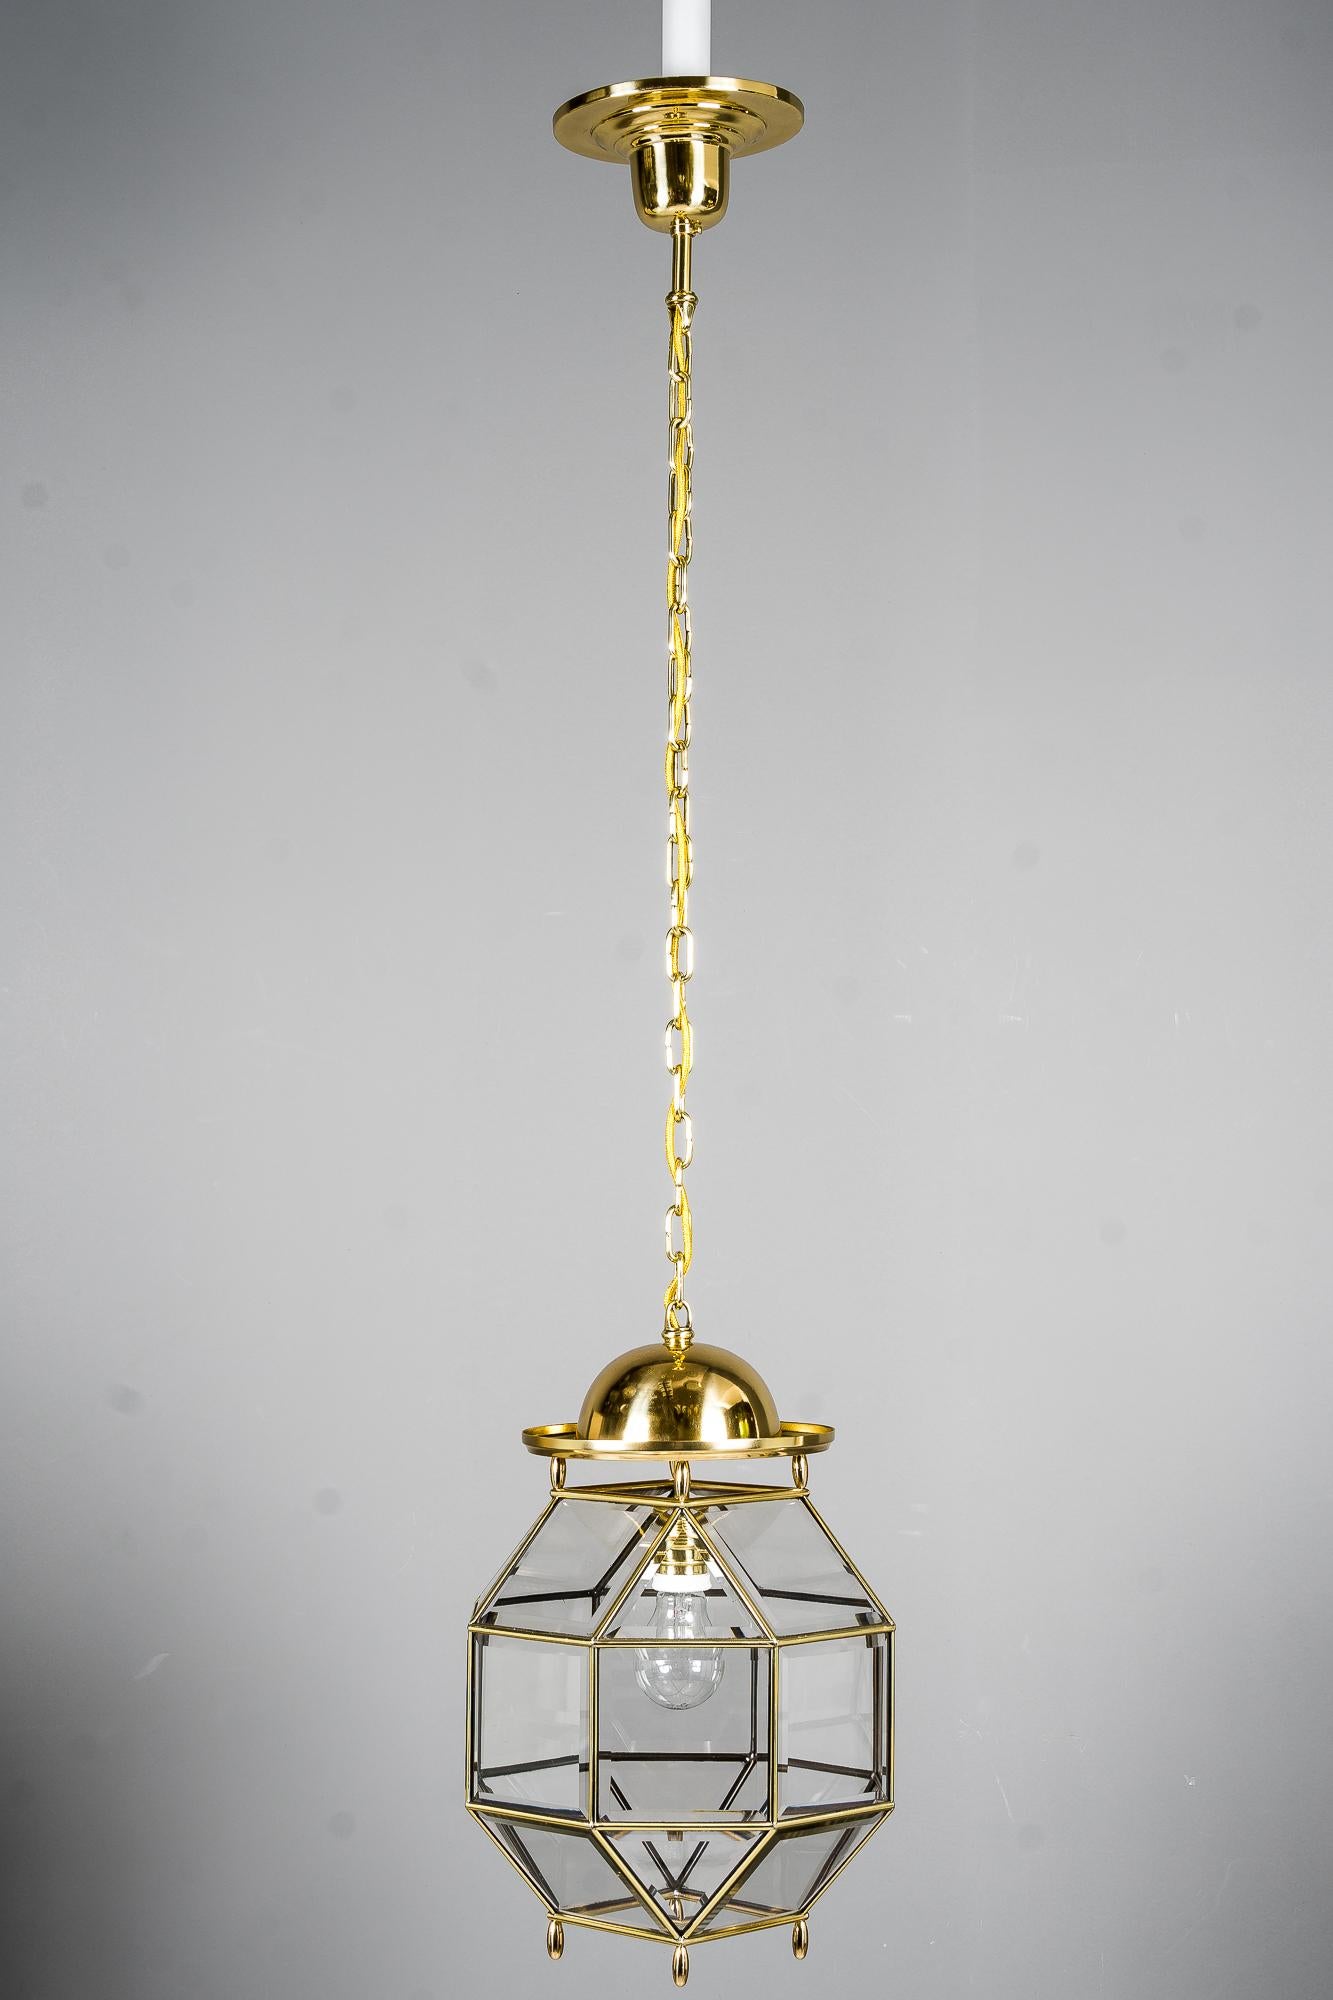 Art Deco lantern vienna around 1920s
Brass polished and stove enameled
Original cut glasses.